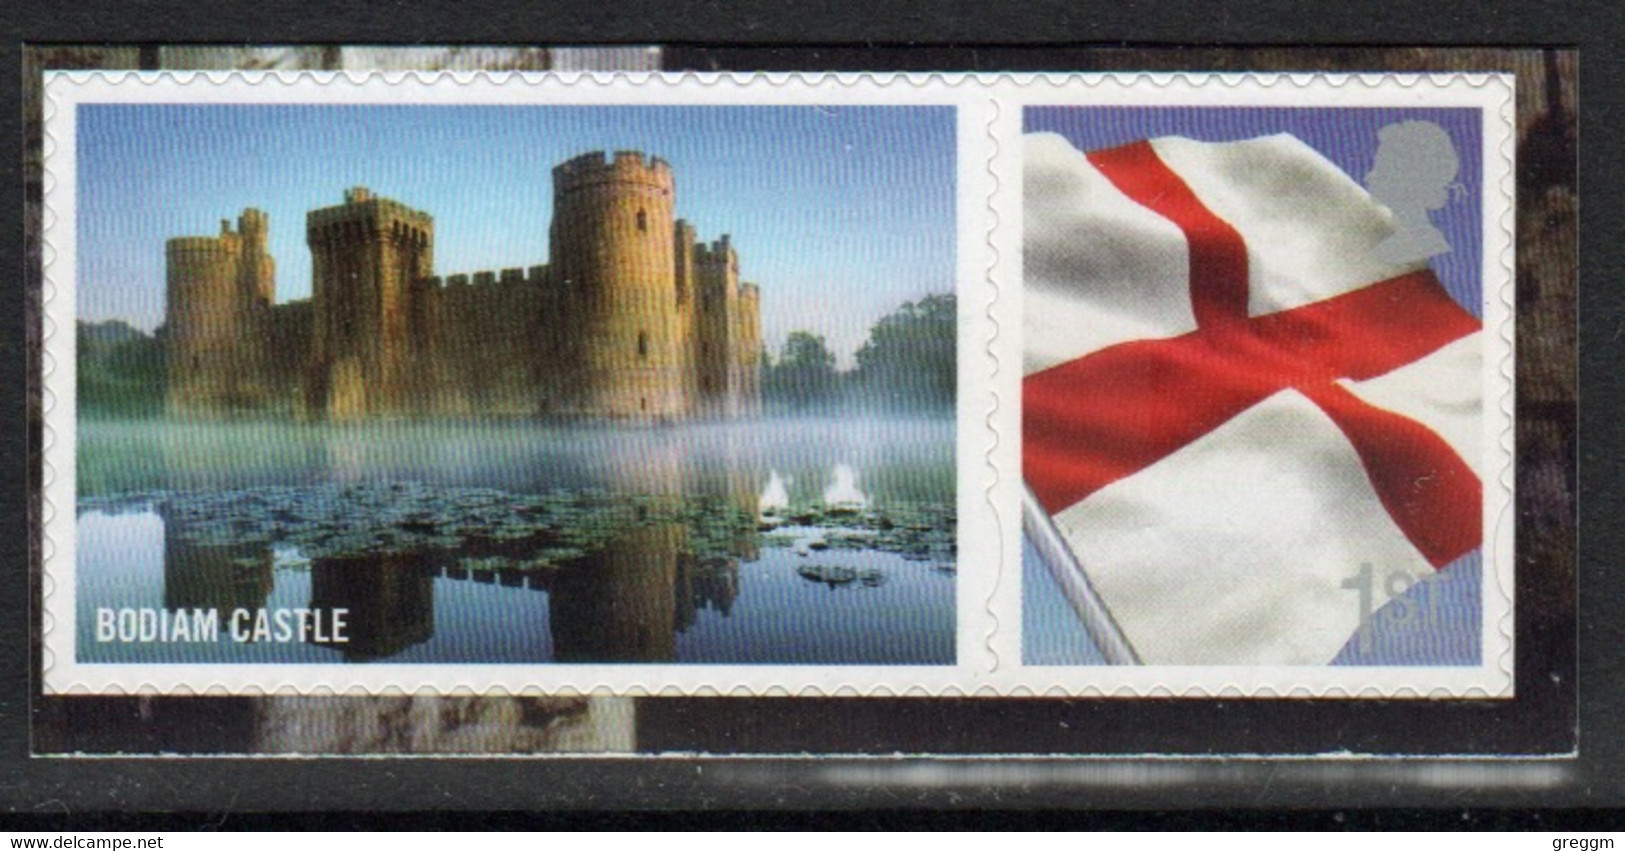 Great Britain 2009 Single Smiler Stamp Celebrating Castles Of England In Unmounted Mint. - Francobolli Personalizzati